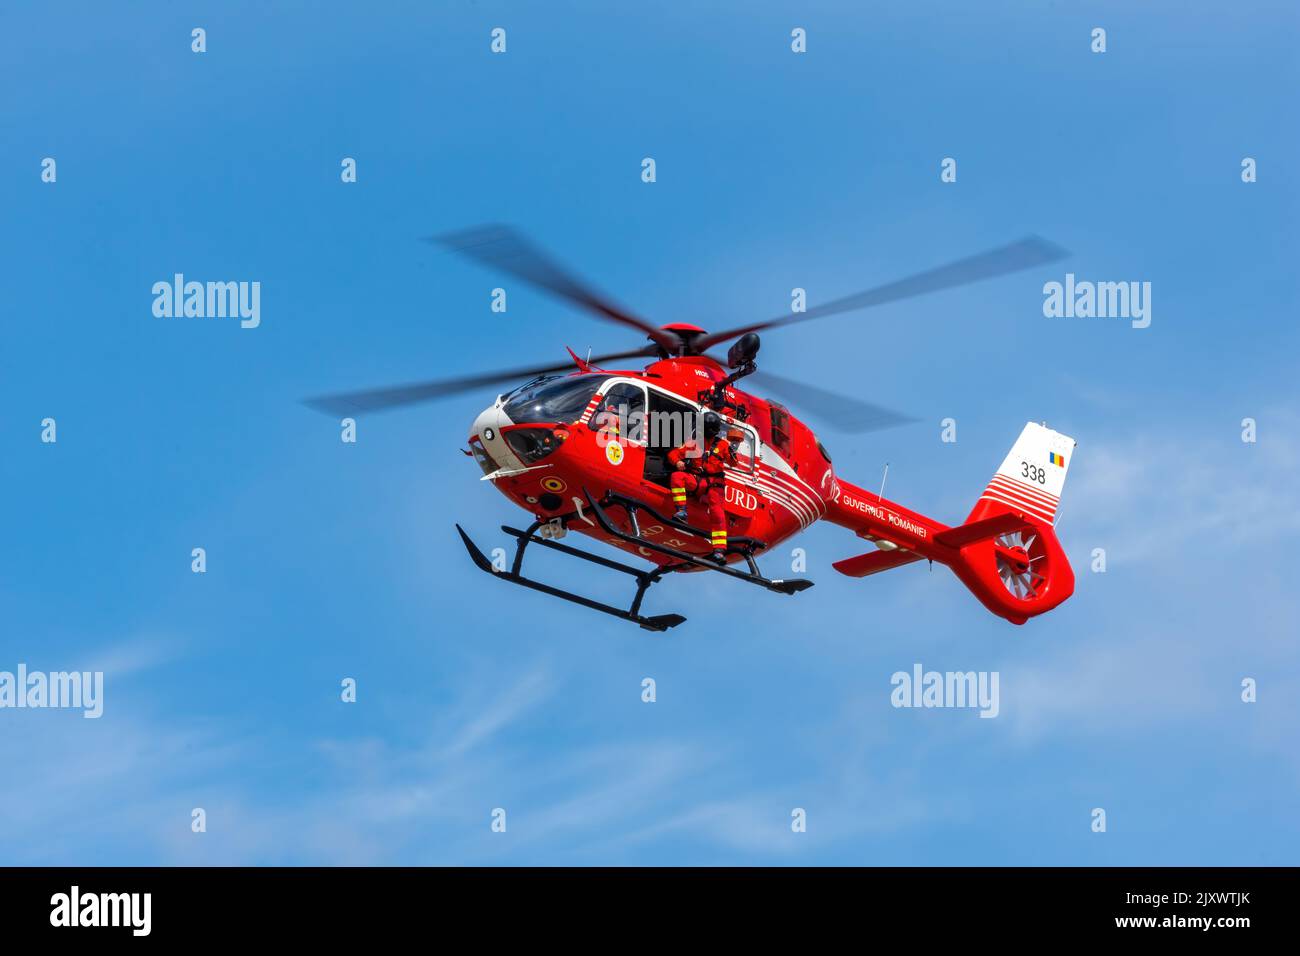 smurd eurocopter ec135 performing at bias 2022 international air show, baneasa airport, bucharest romania Stock Photo